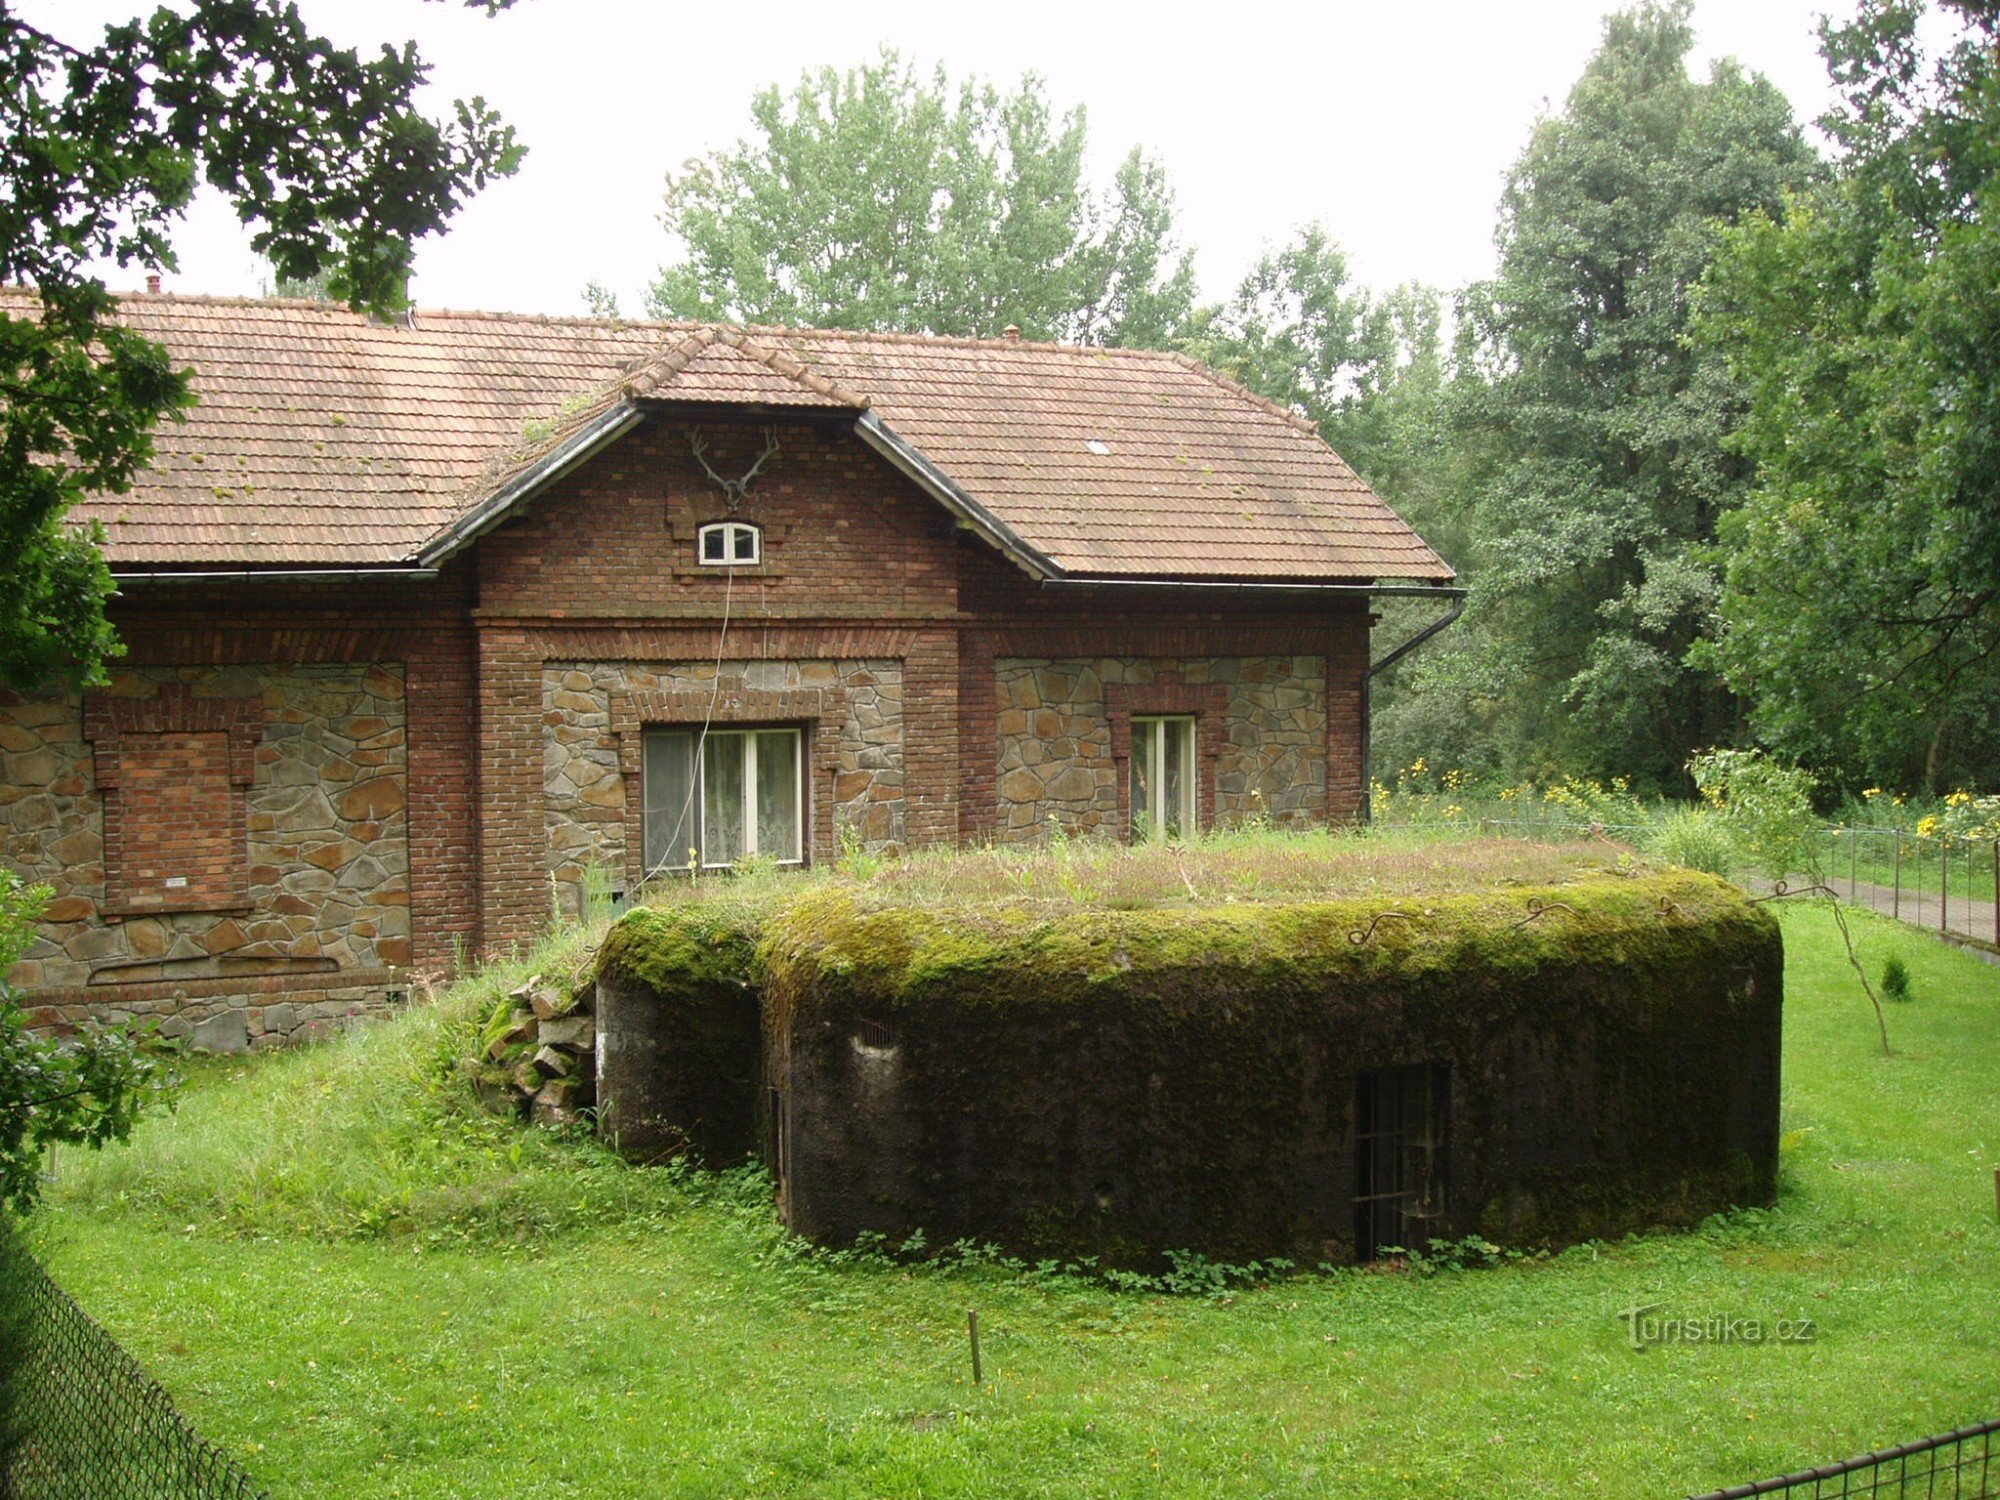 Svjetlosna utvrda "ŘOPÍK" u vrtu rezervata divljači na lokalitetu Purkrabí kod Chluma kod Třeboně